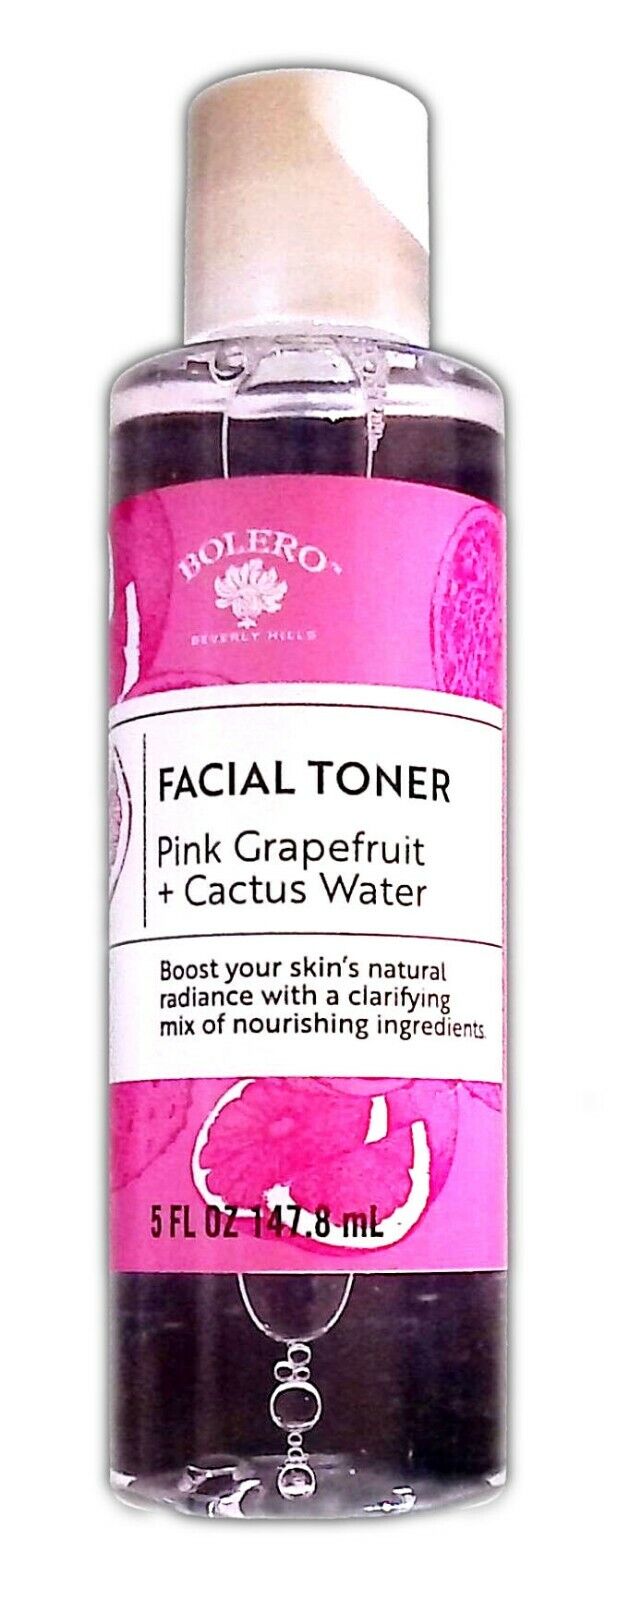 Bolero Facial Toner Pink Grapefruit + Cactus Water 5fl oz 147.8ml